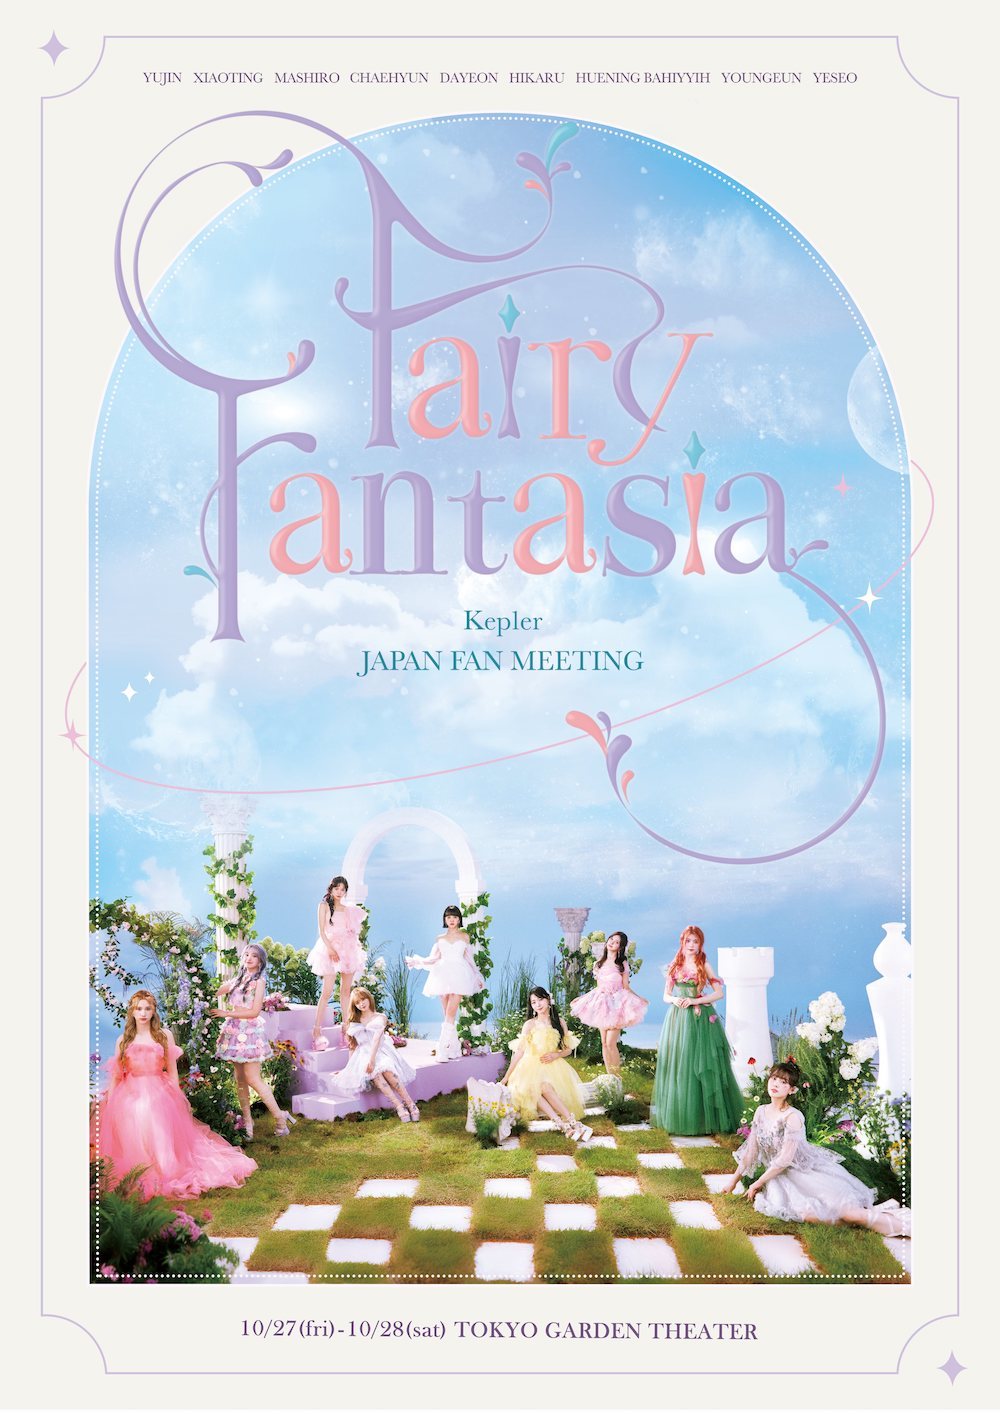 『Kep1er JAPAN FAN MEETING “Fairy Fantasia”』